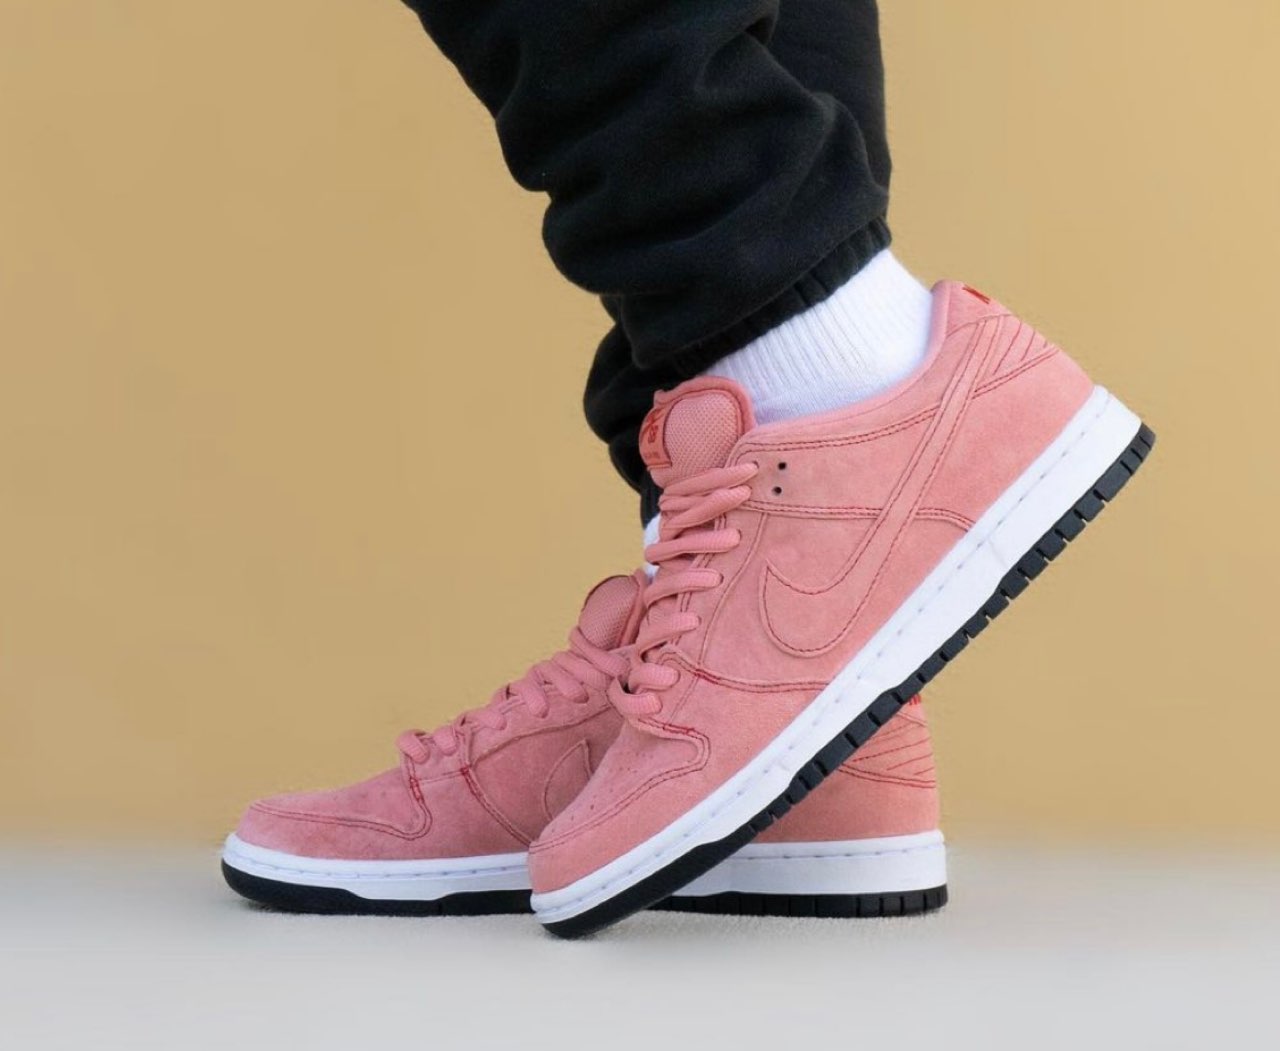 Nike SB】Dunk Low Pro PRM “Pink Pig”が国内2021年2月1日/2月17日に ...